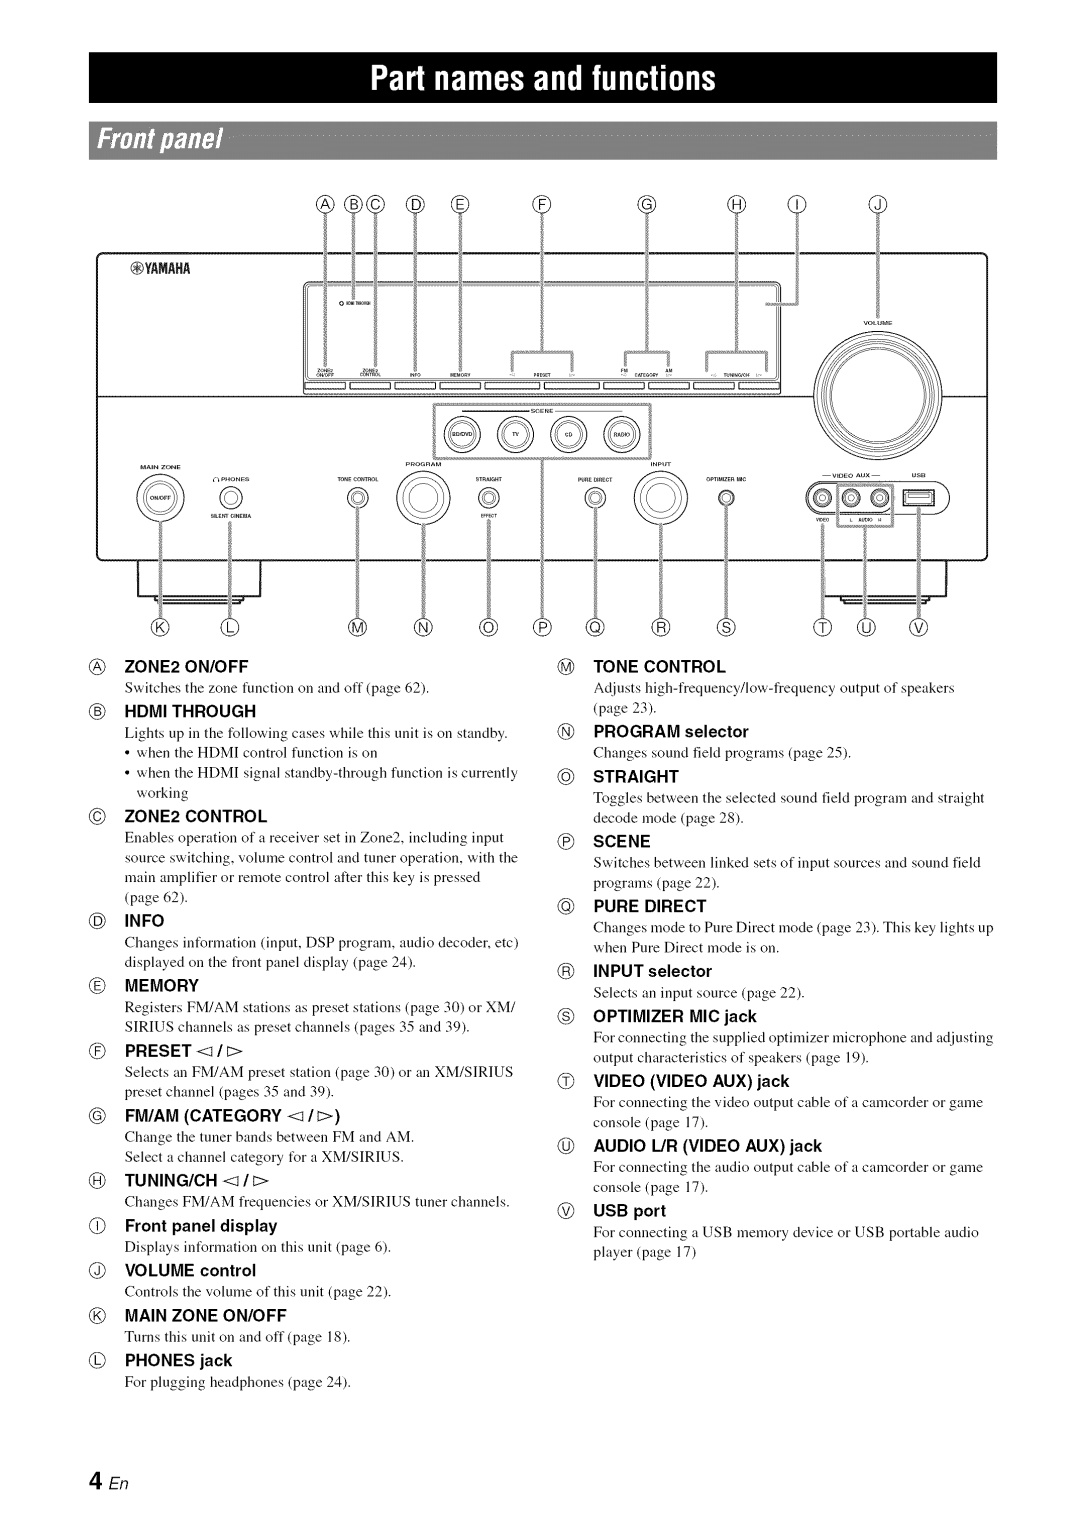 Yamaha RX-V1065 owner manual @Info, @Front panel display 